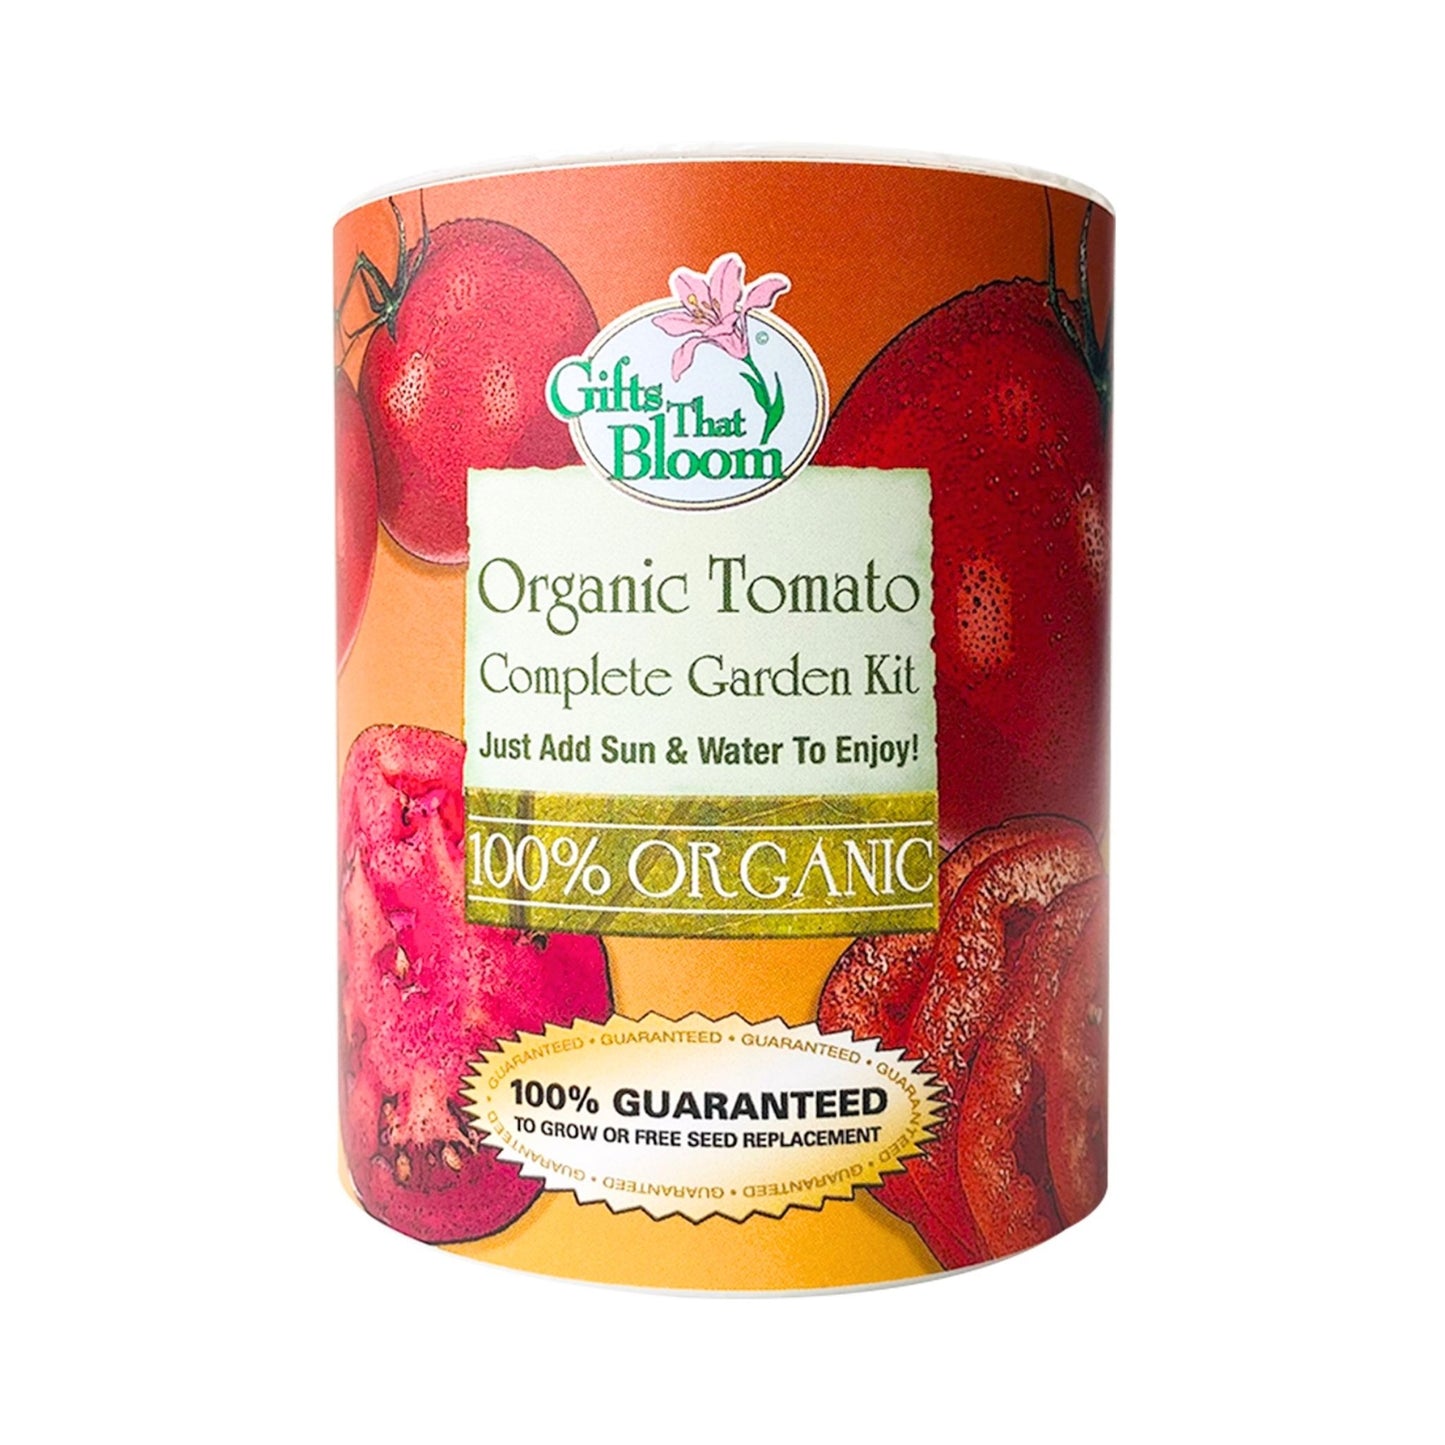 Organic Tomato Garden Grocan